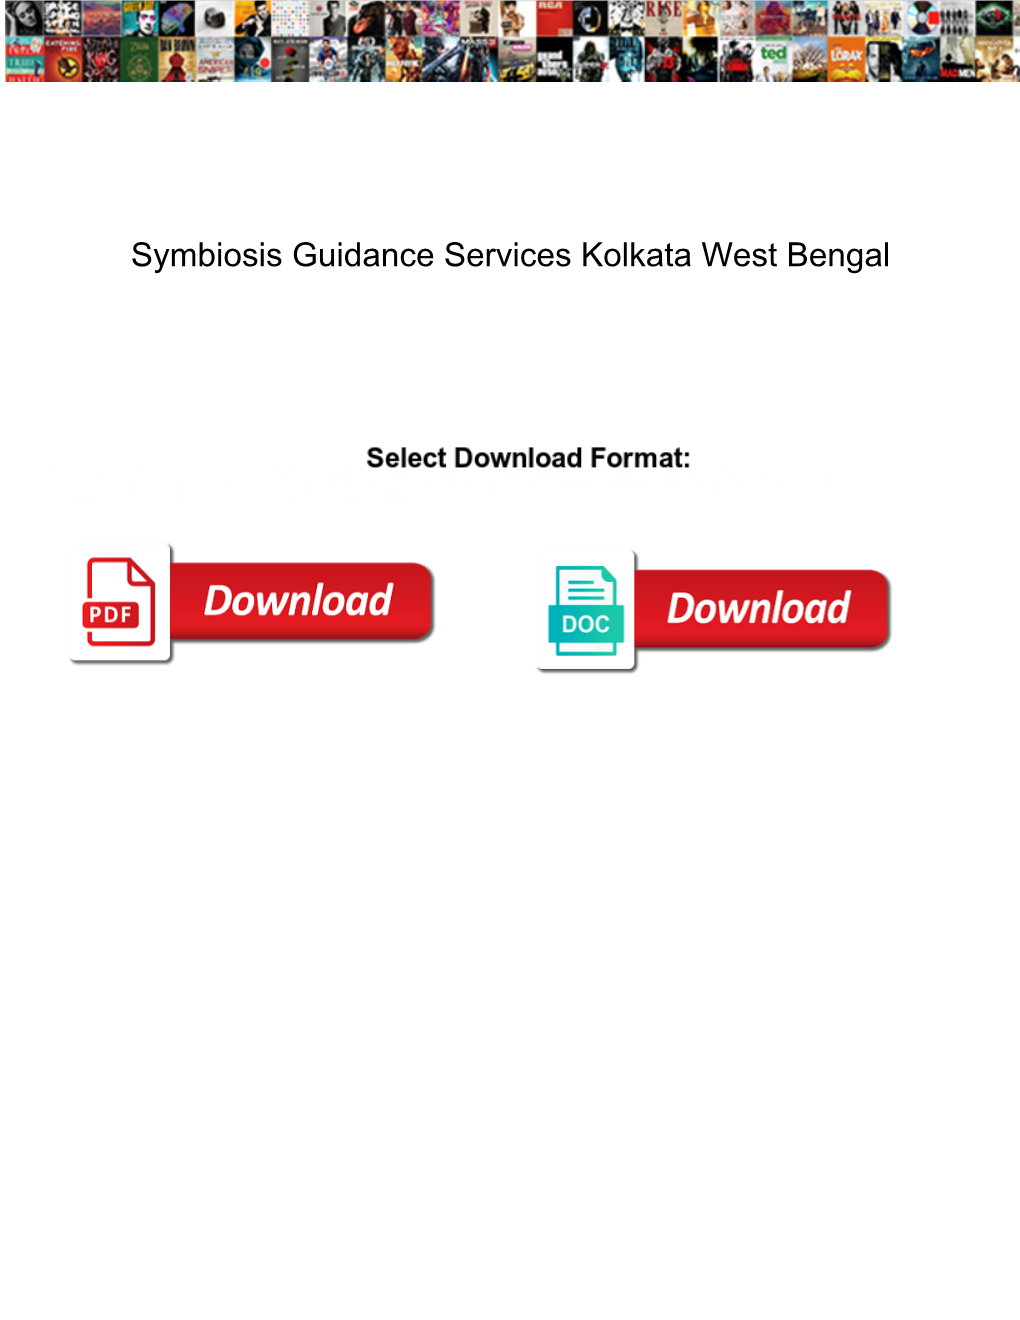 Symbiosis Guidance Services Kolkata West Bengal